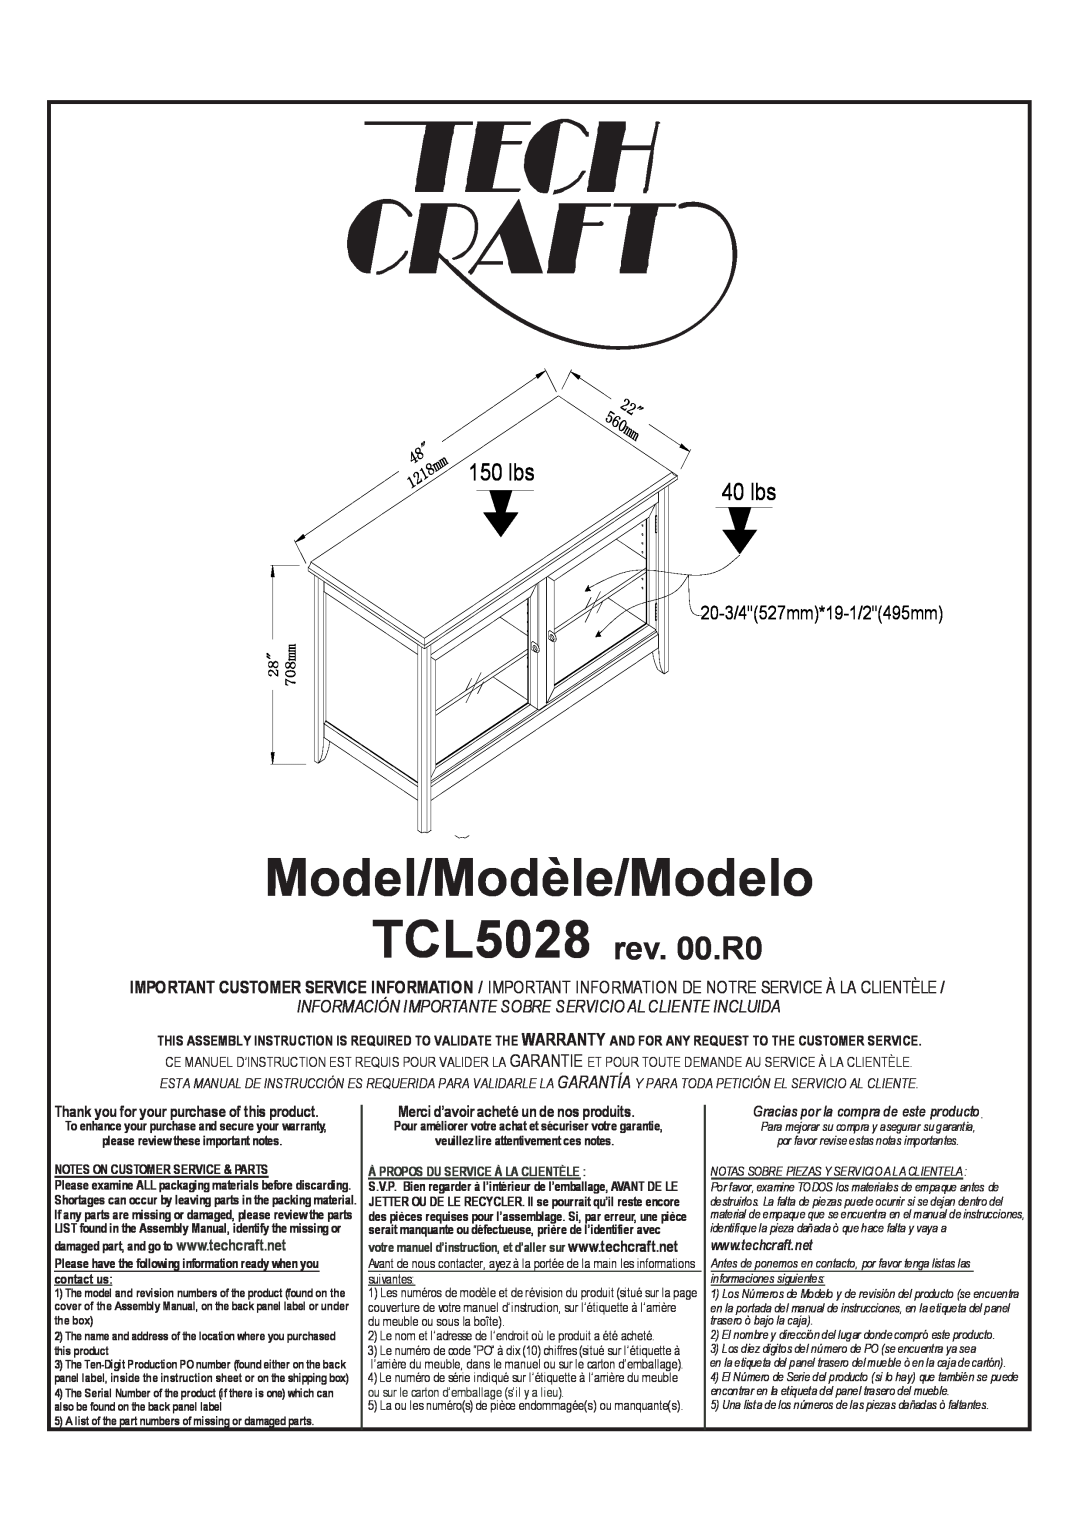 Tech Craft manual Model/Modèle/Modelo, TCL5028 rev. 00.R0, 150 lbs, 40 lbs, 20-3/4527mm*19-1/2495mm, suivantes, the box 